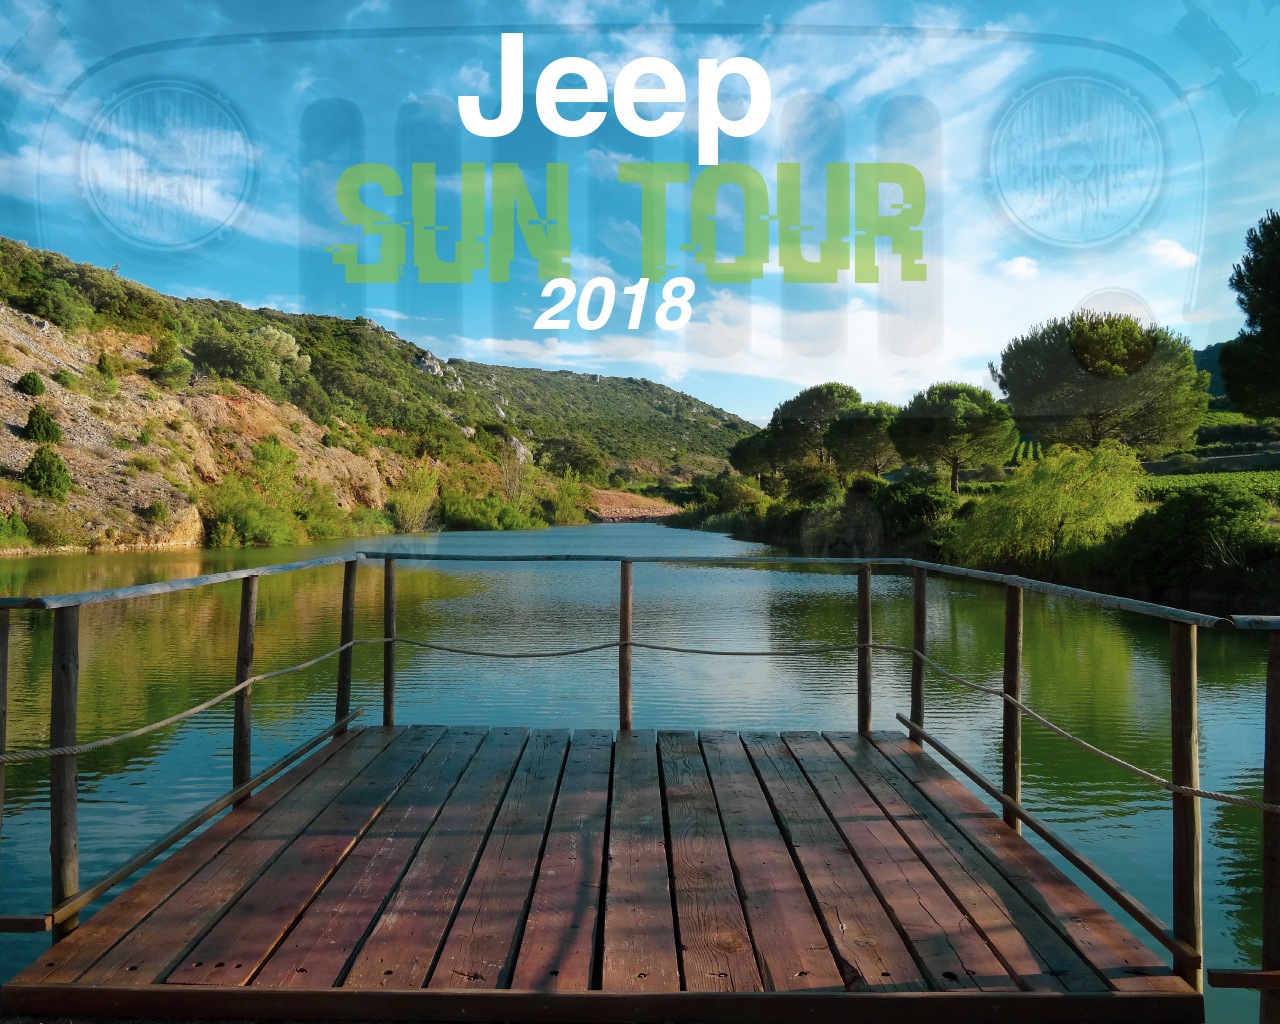 Jeep Sun tour